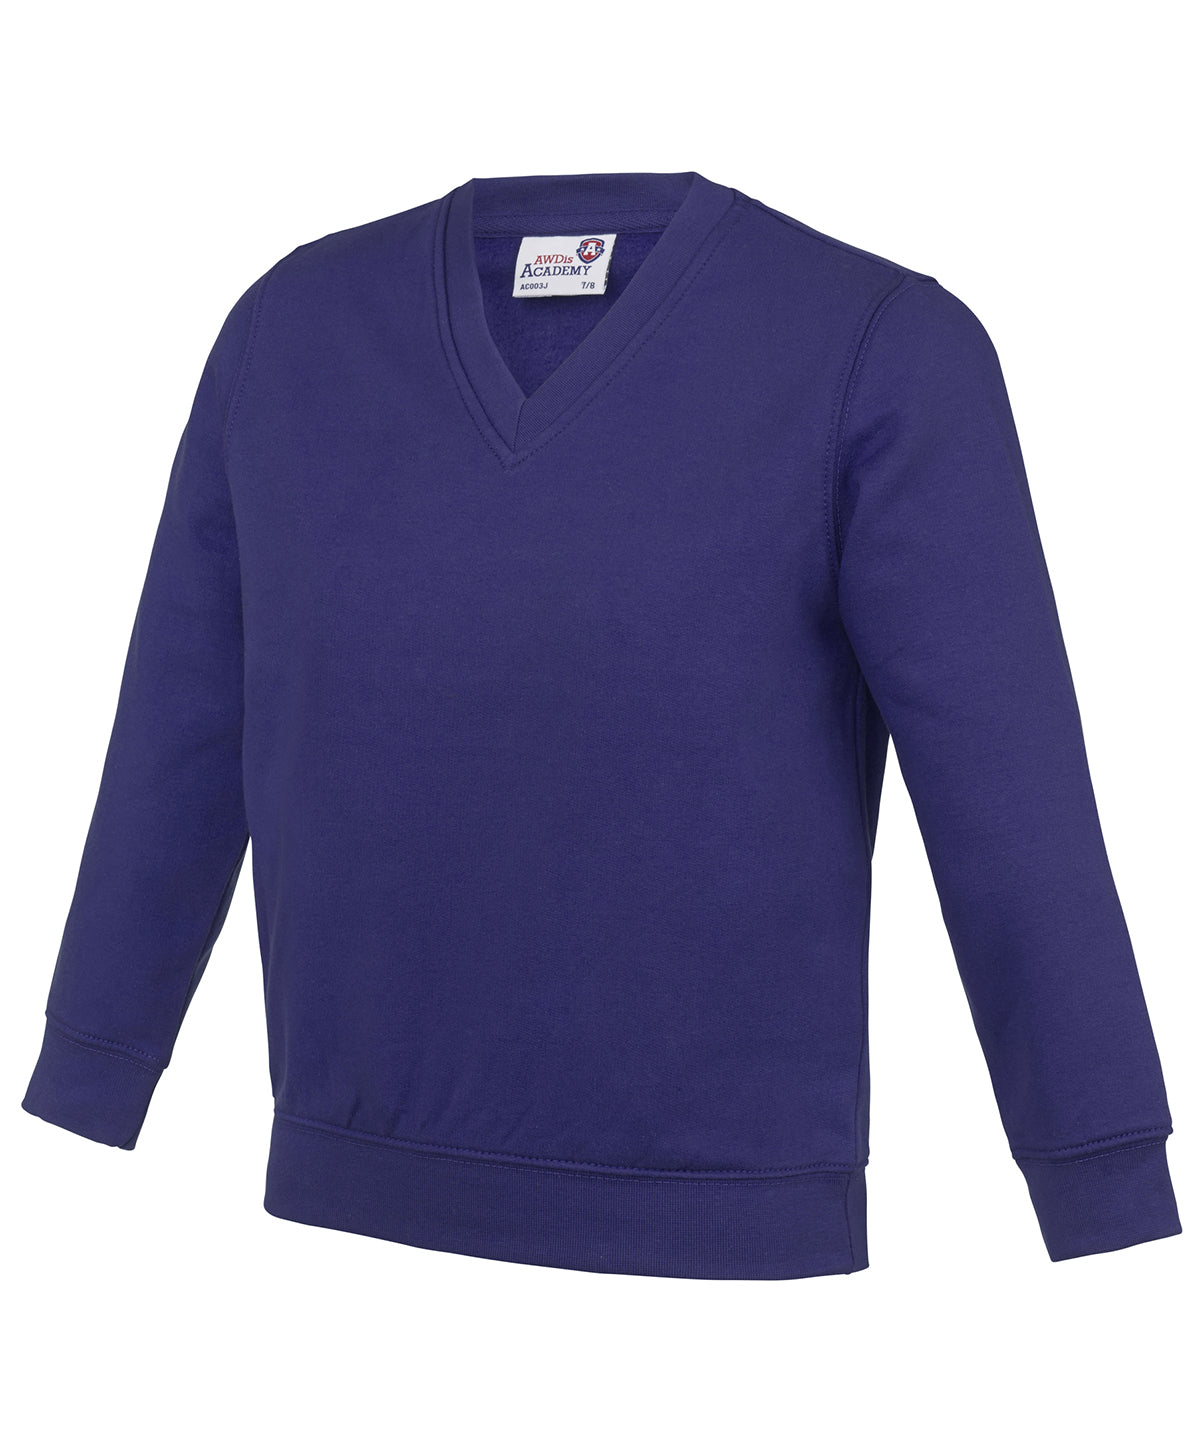 Academy Purple - Kids Academy v-neck sweatshirt - GarmentEmbroidery